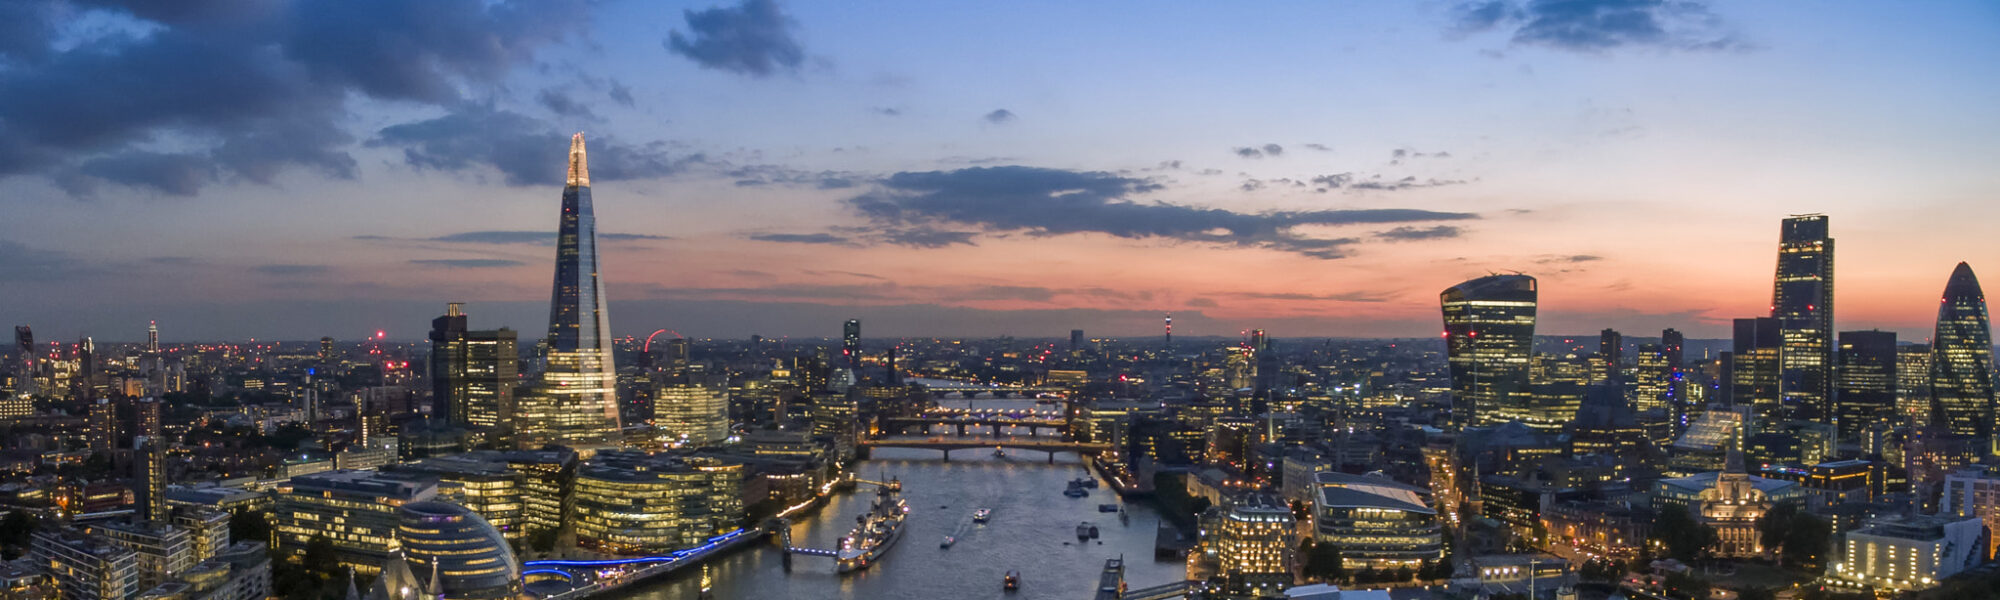 The London skyline at sunrise, showing key London landmarks such as the Shard, Tower Bridge, Tower of London.